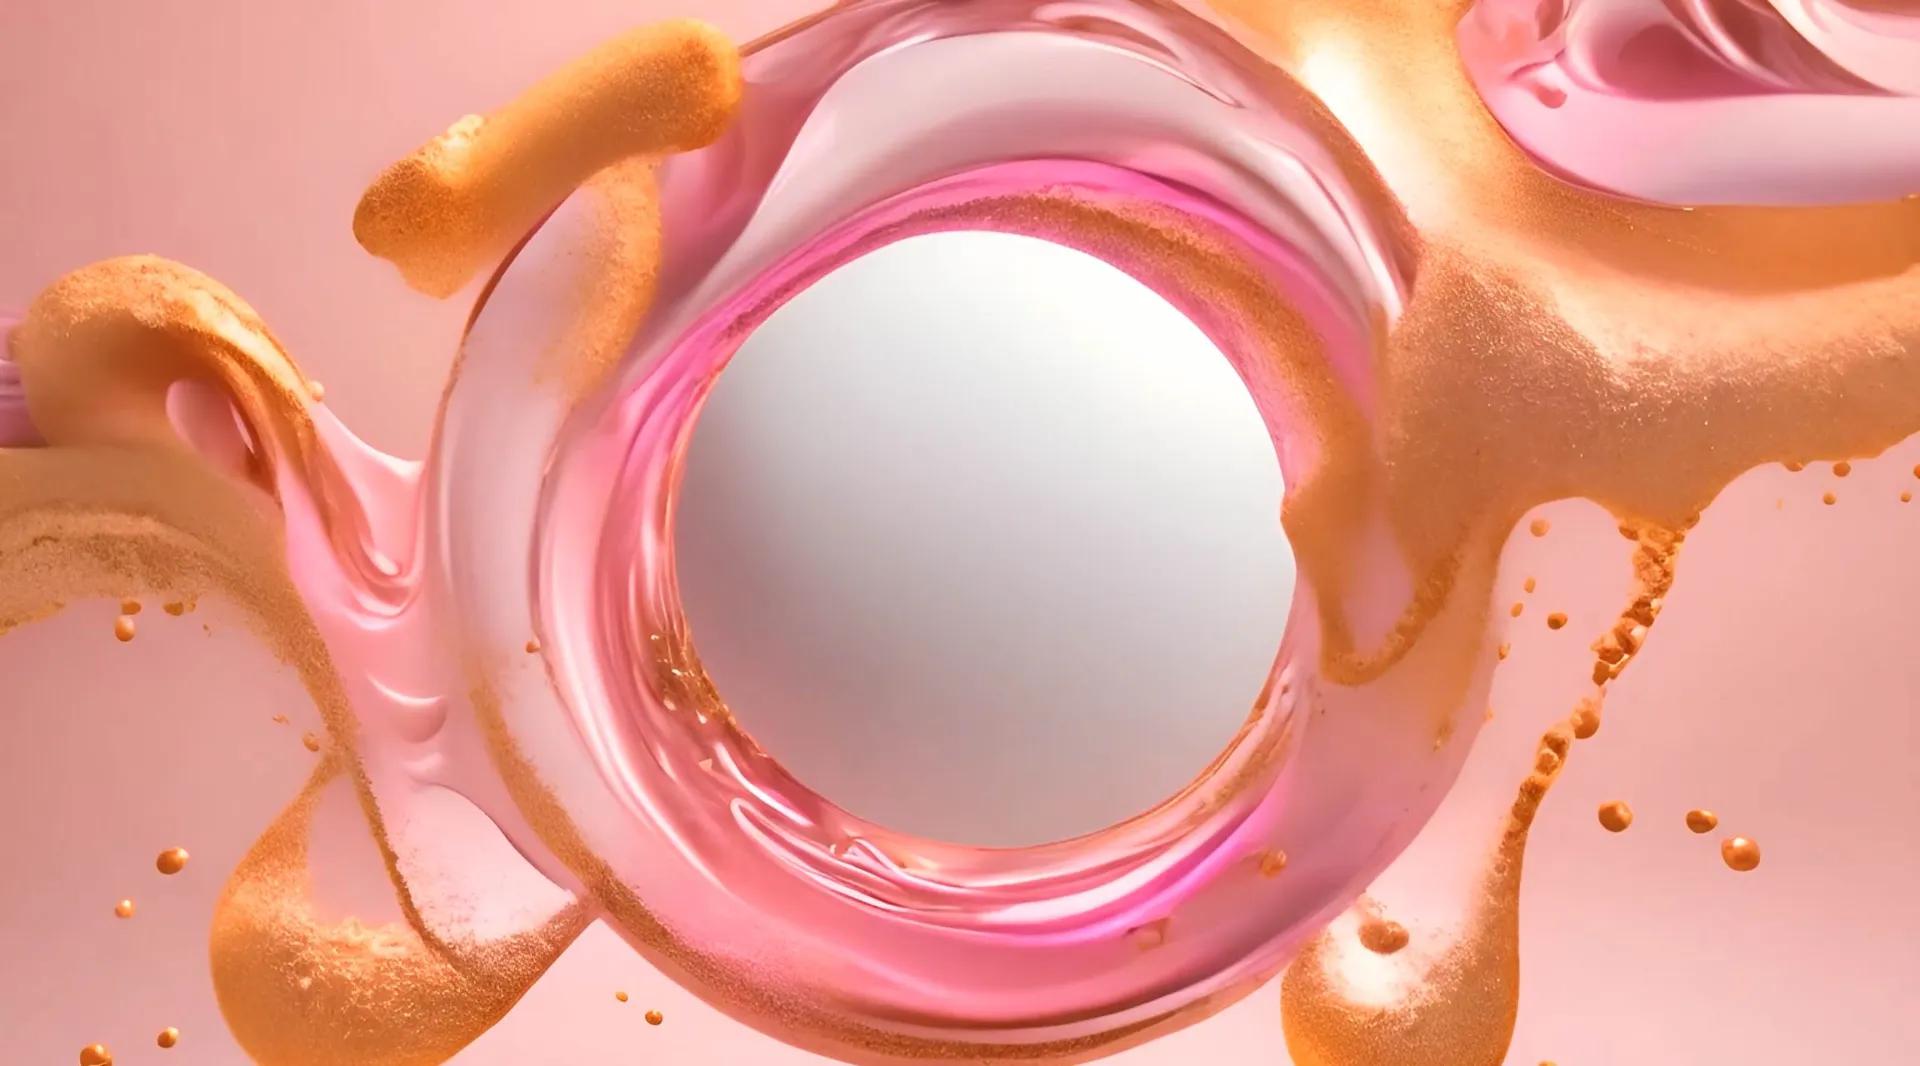 Metallic Gold Flow on Soft Pink Luxury Video Backdrop